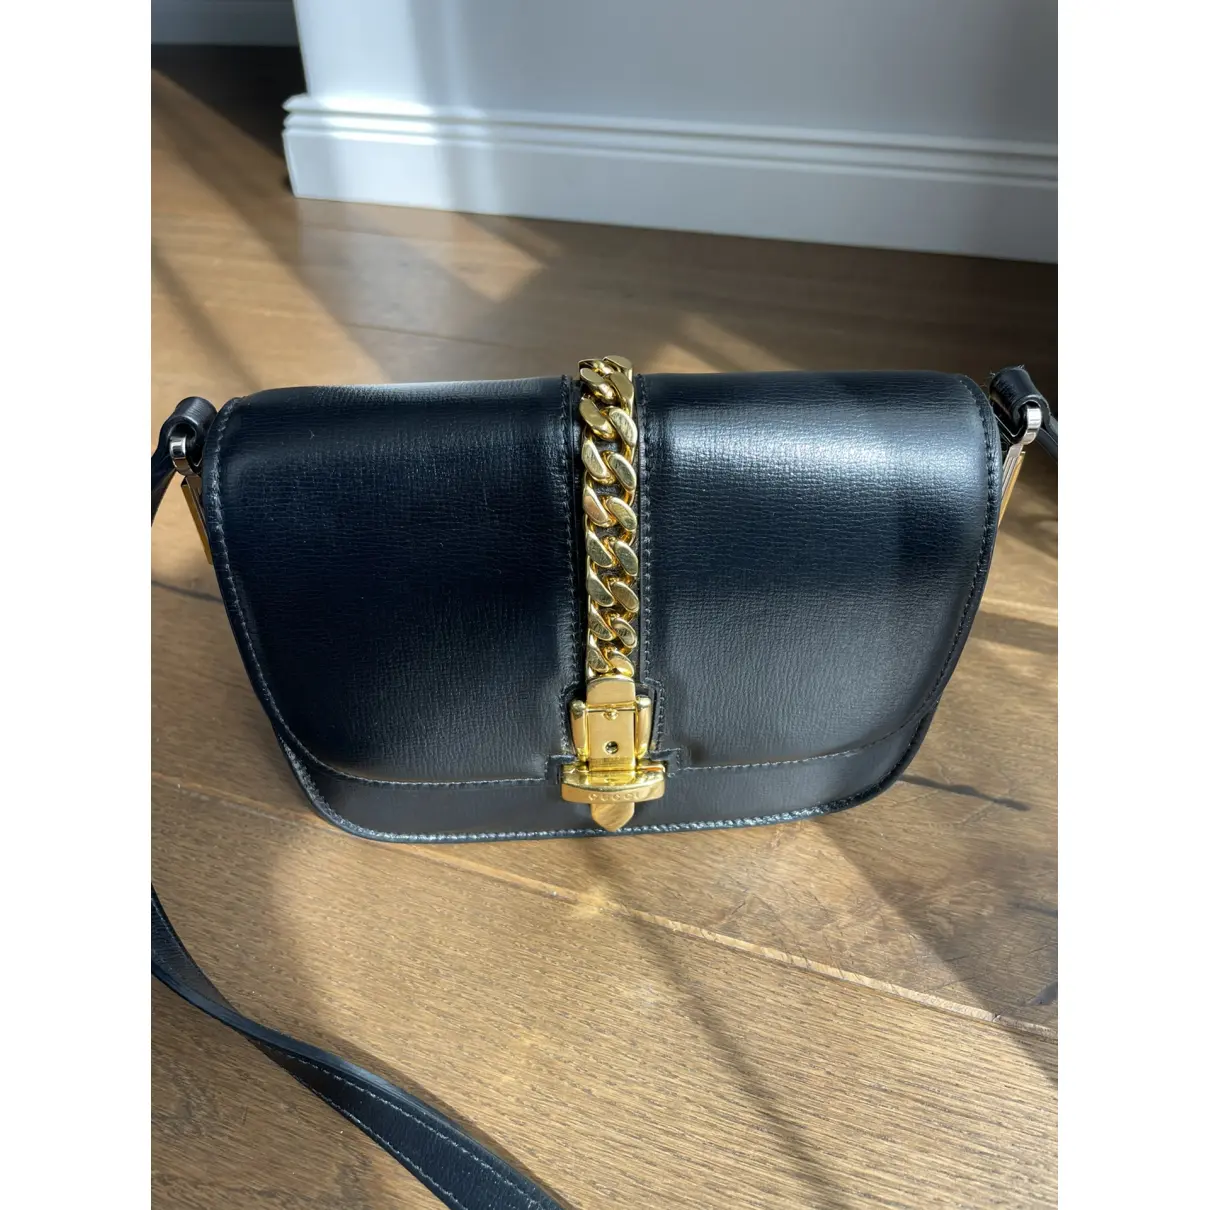 Buy Gucci Sylvie 1969 leather crossbody bag online - Vintage